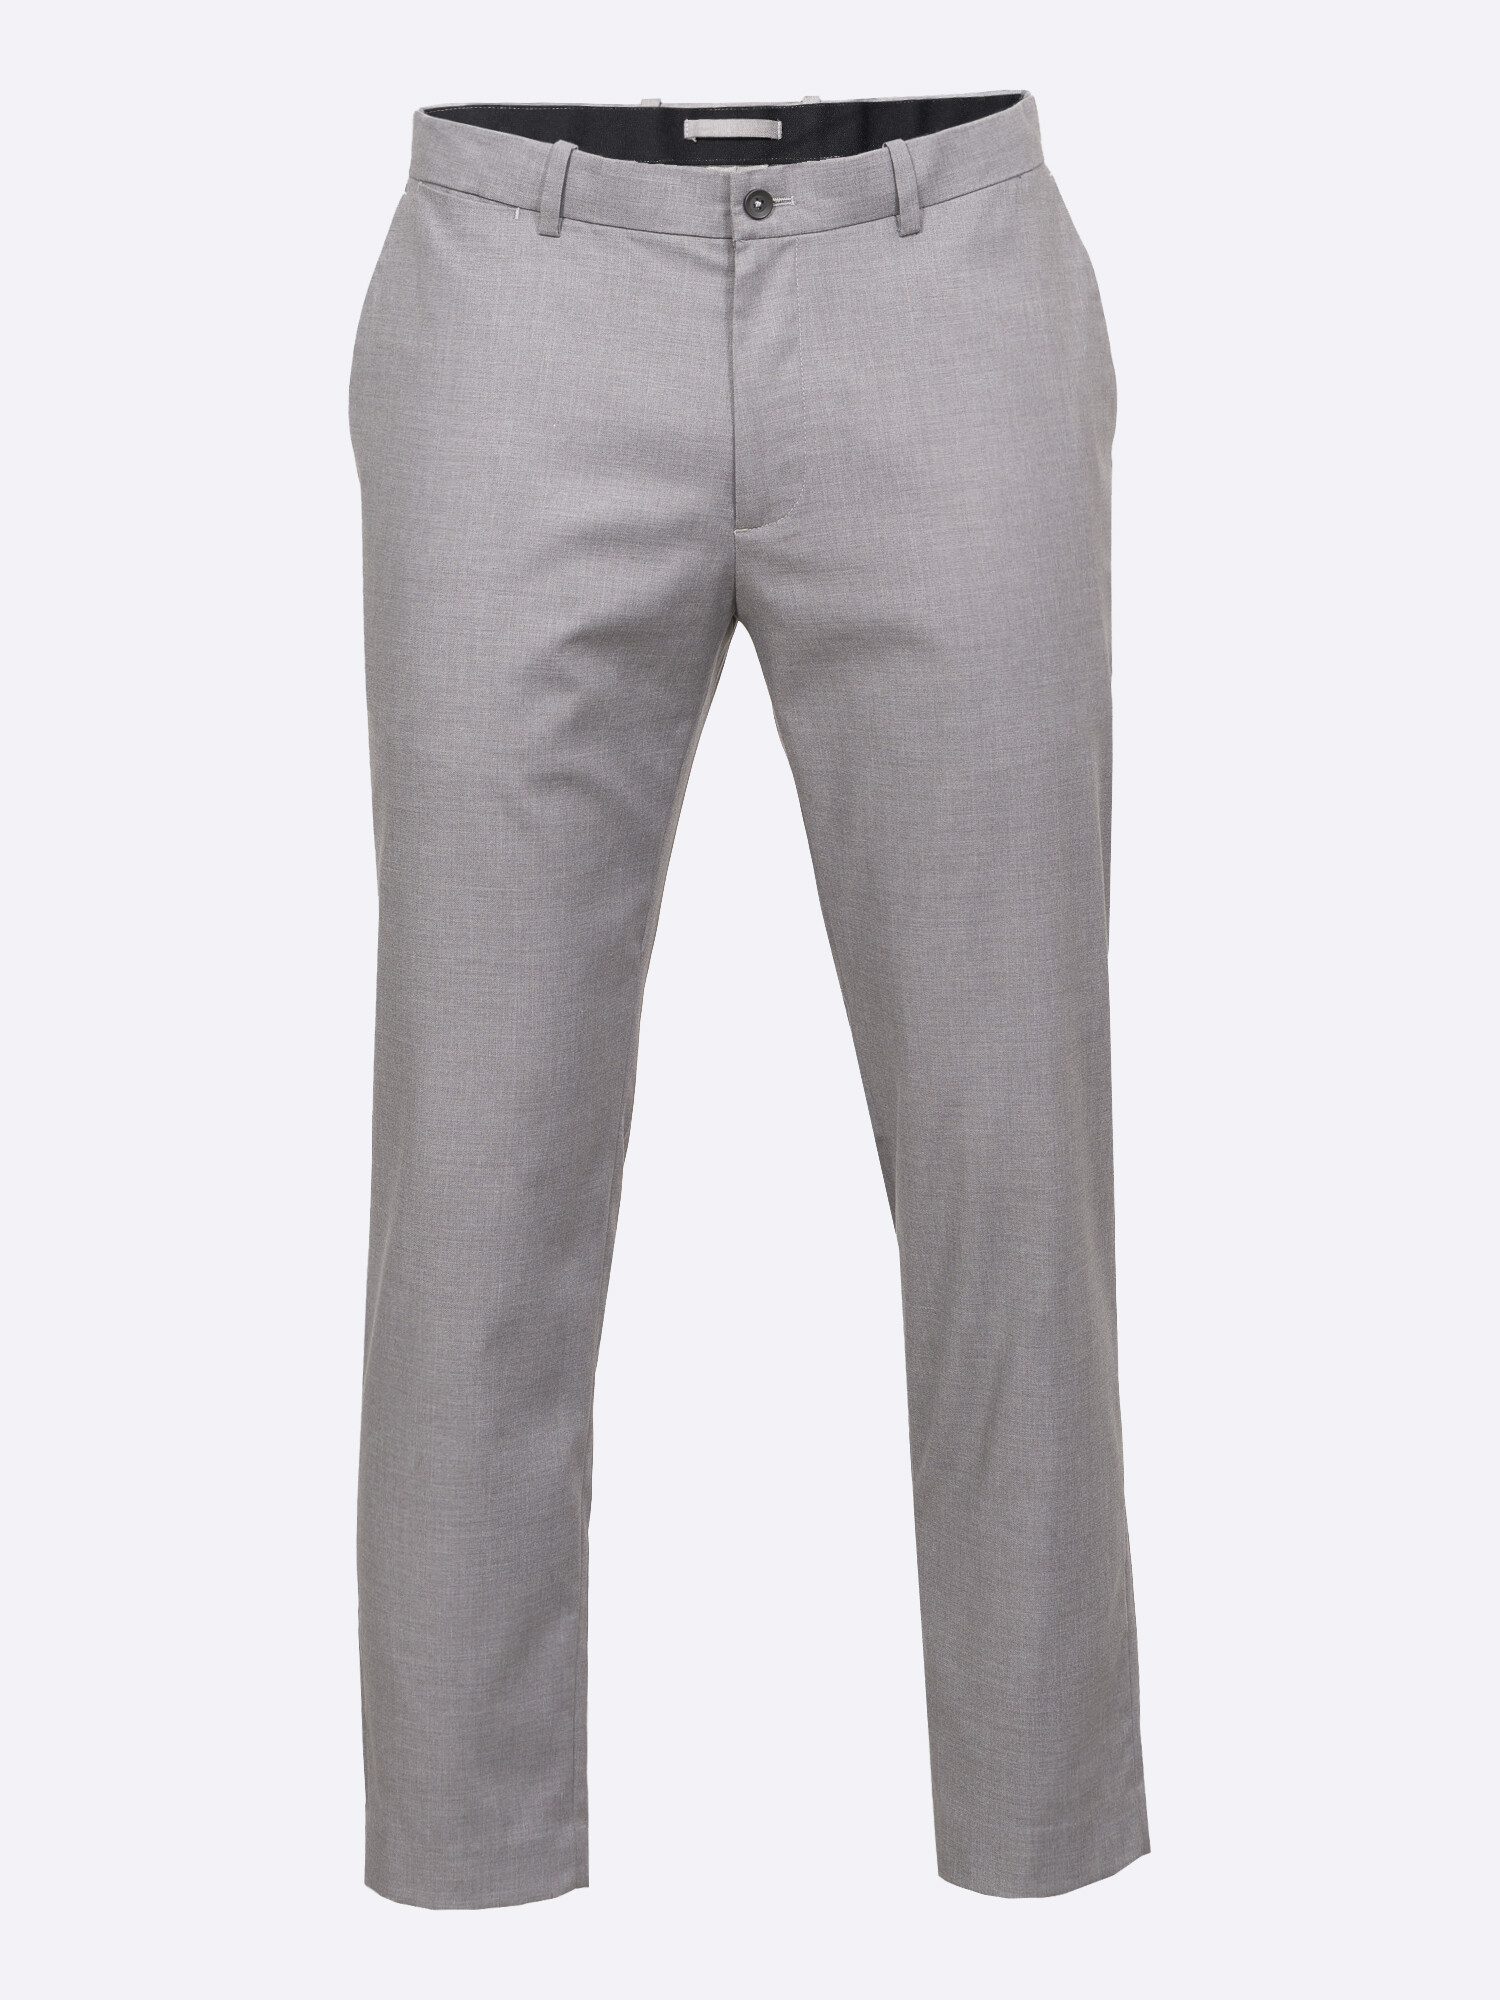 Pantalon sastre - gris de Hombre — Cuatroases